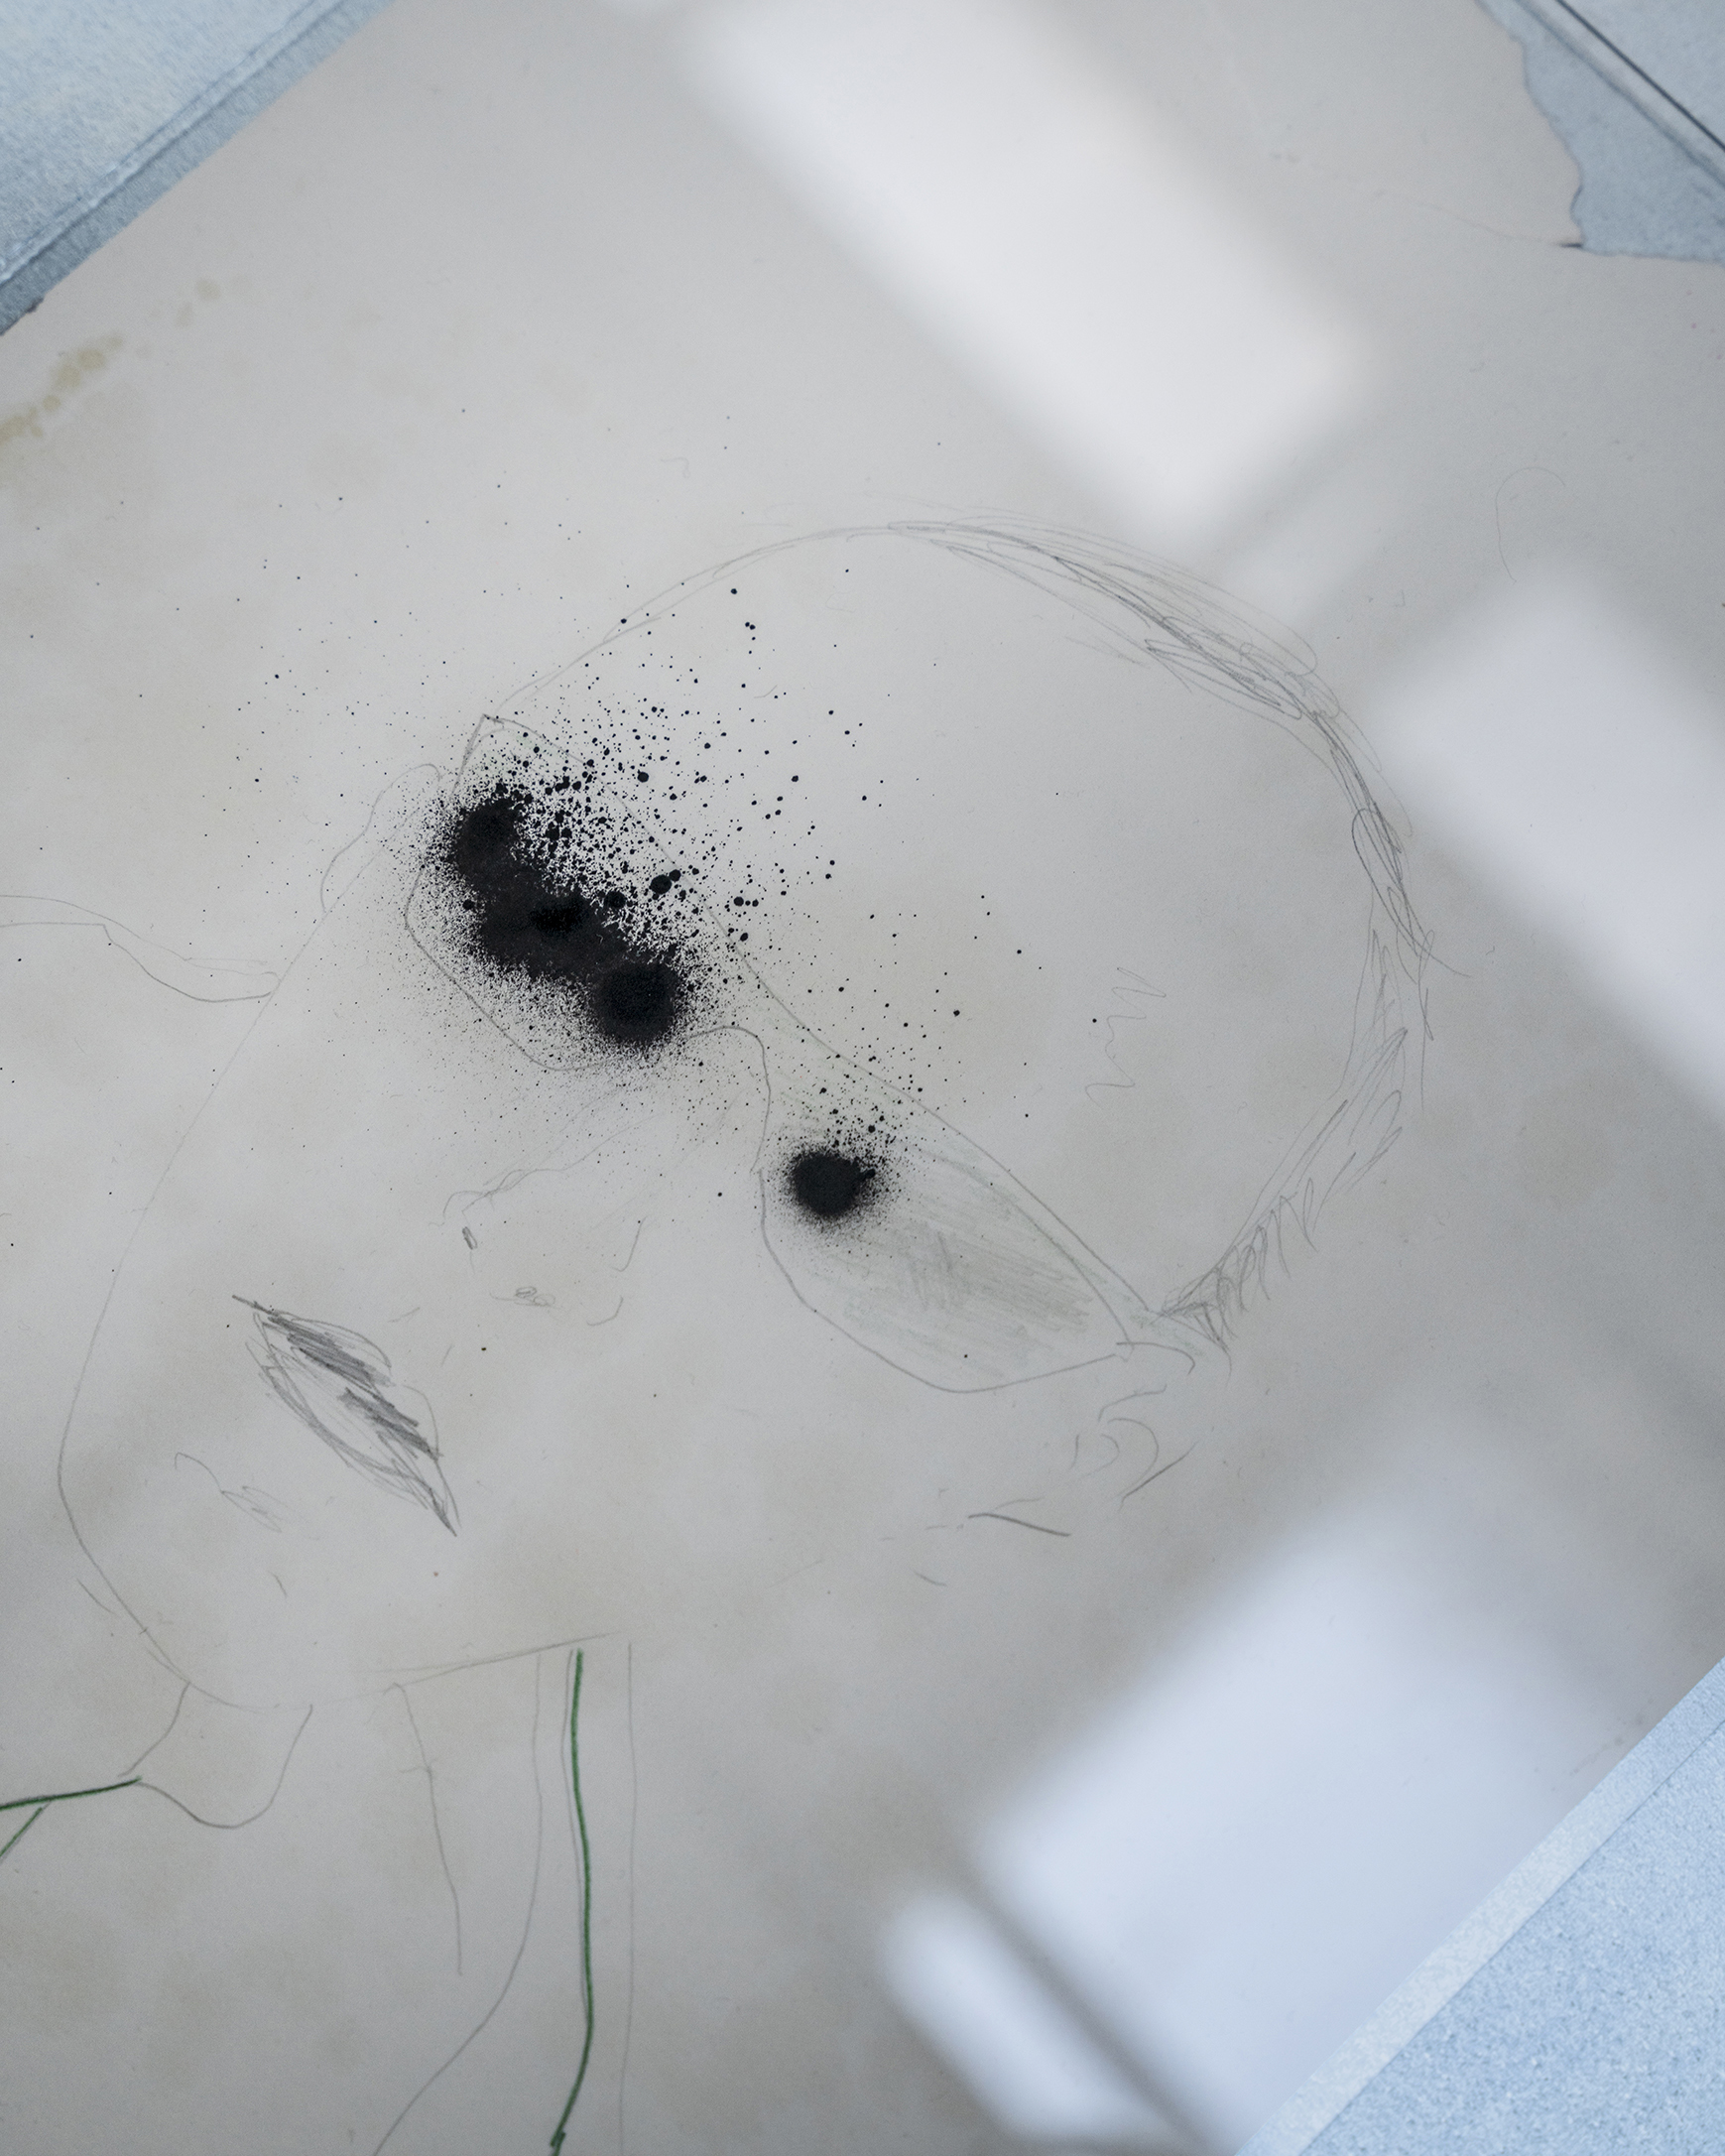 Hadrien Jacquelet, Self-Portrait, 2017, Mixed media on paper, 42 x 31 cm